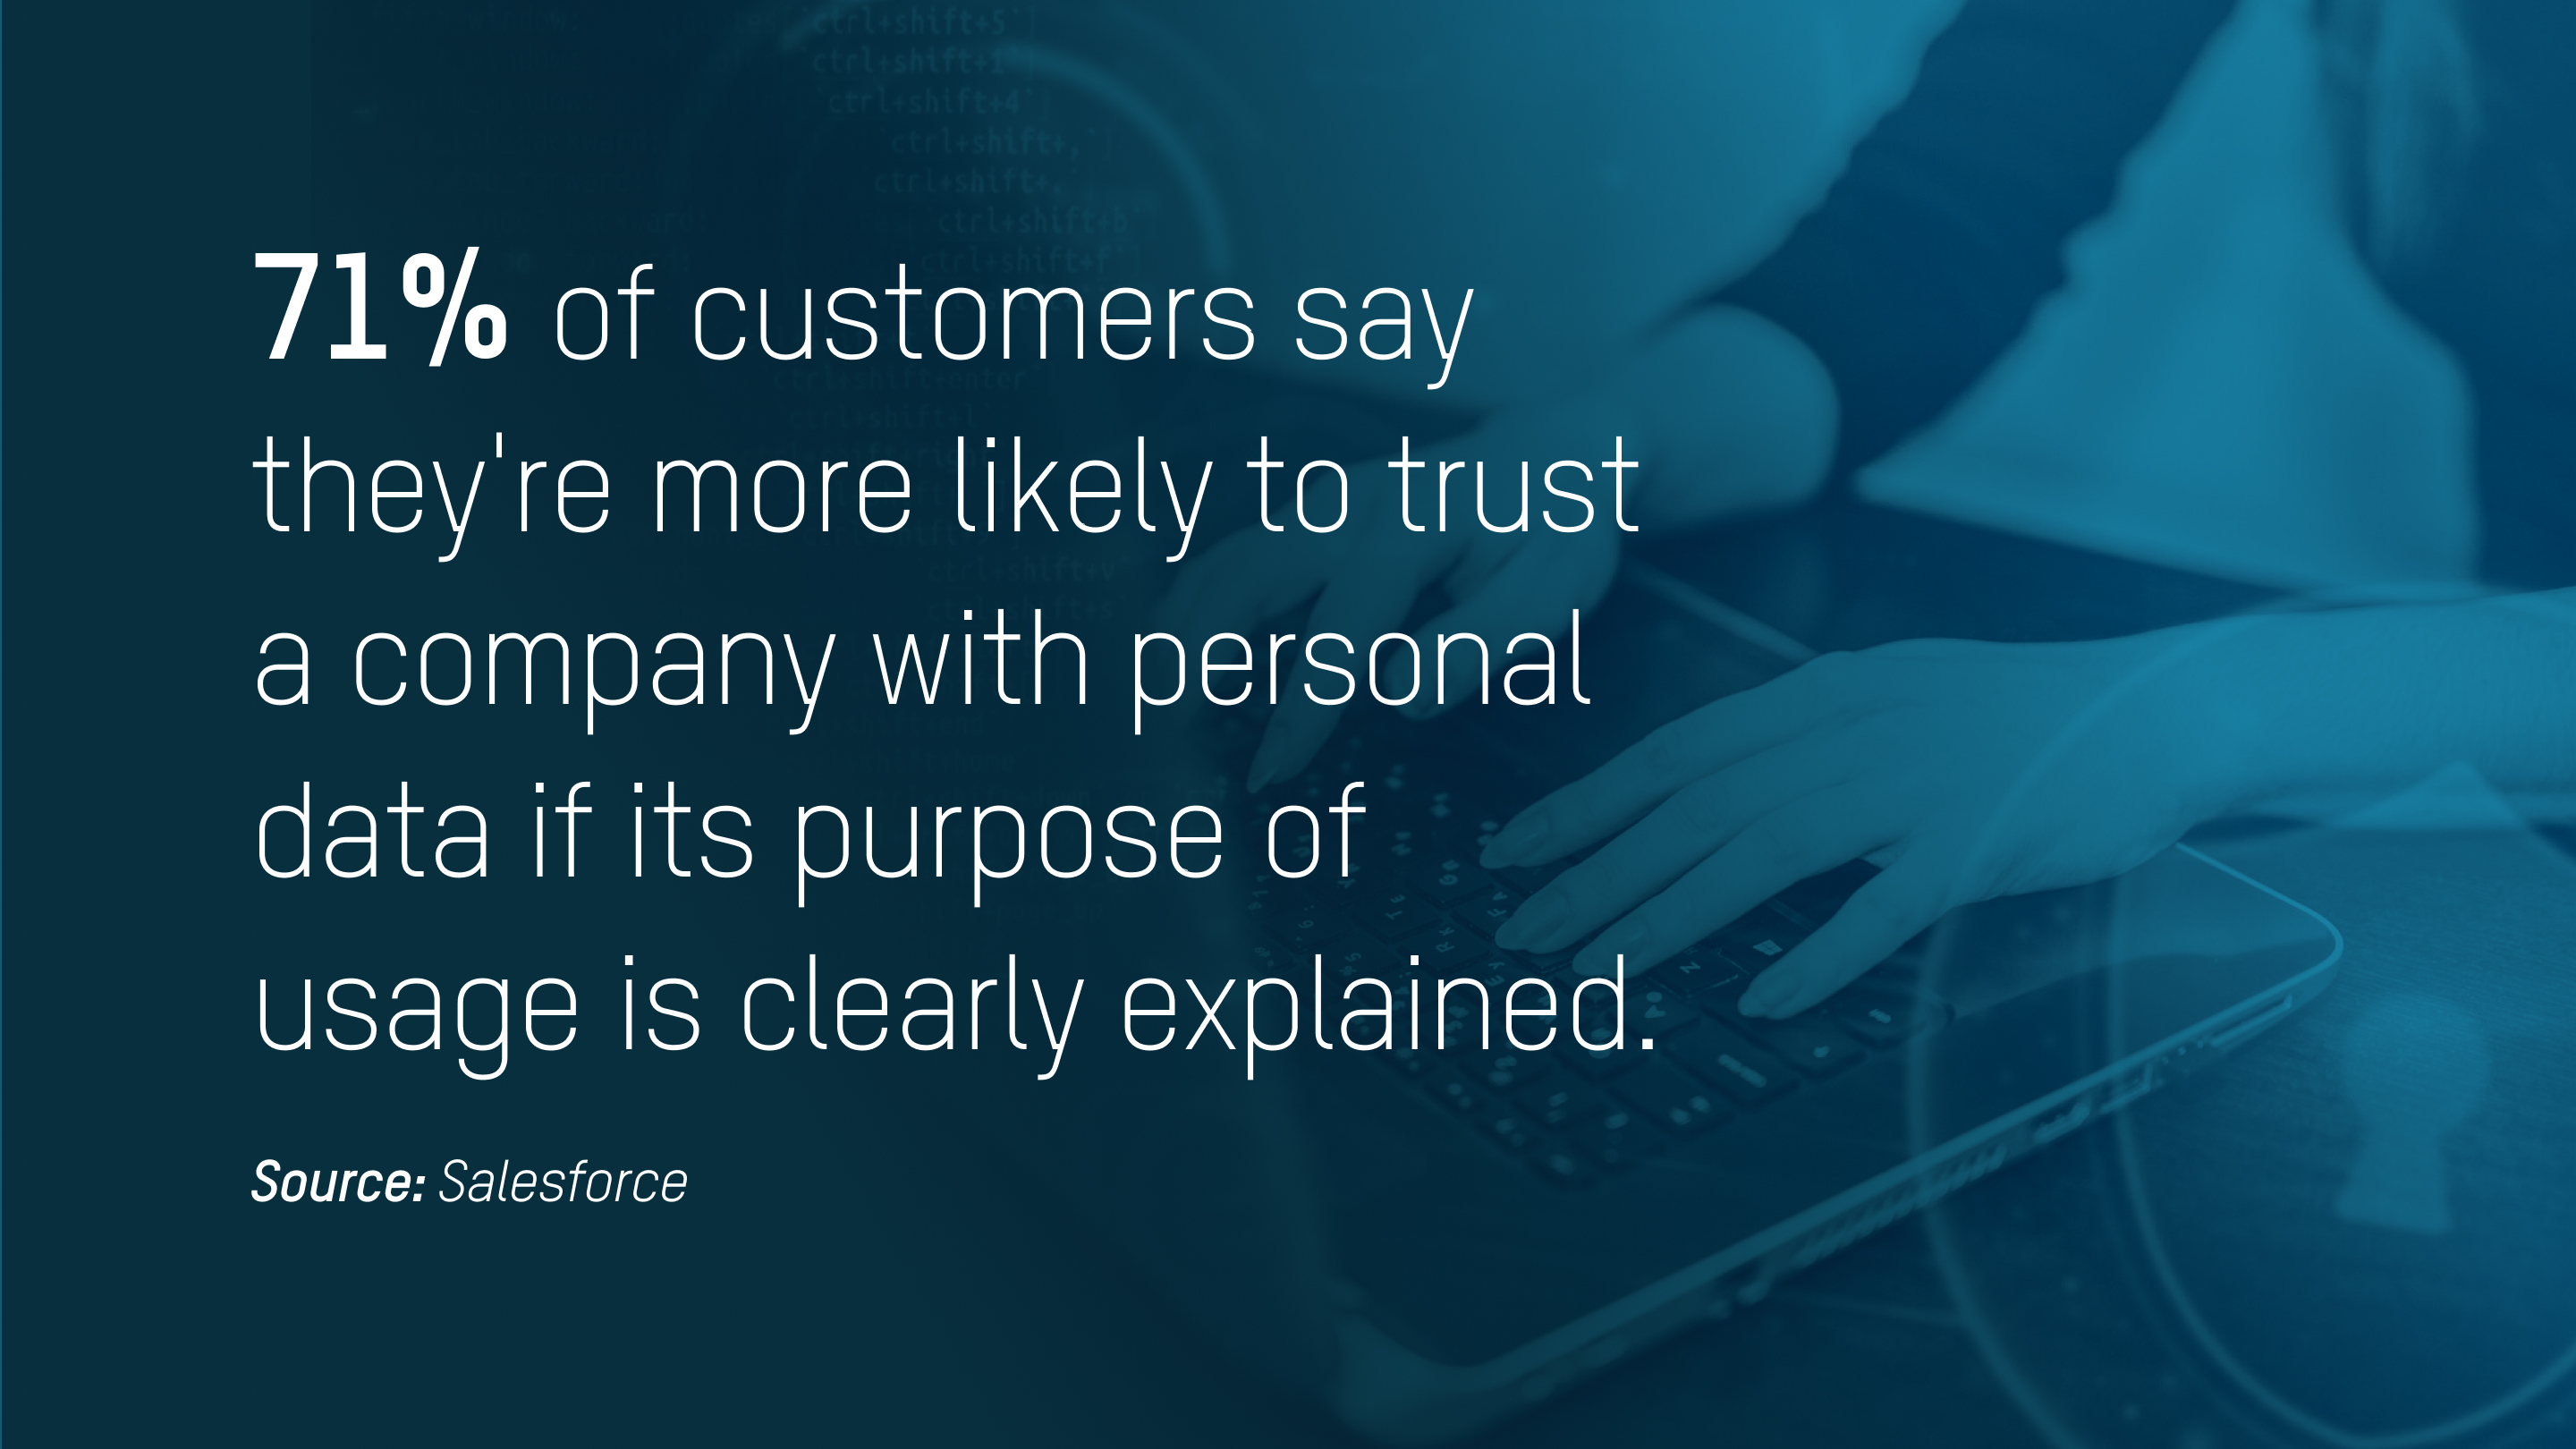 Alt text: 71% trust companies transparent with data usage